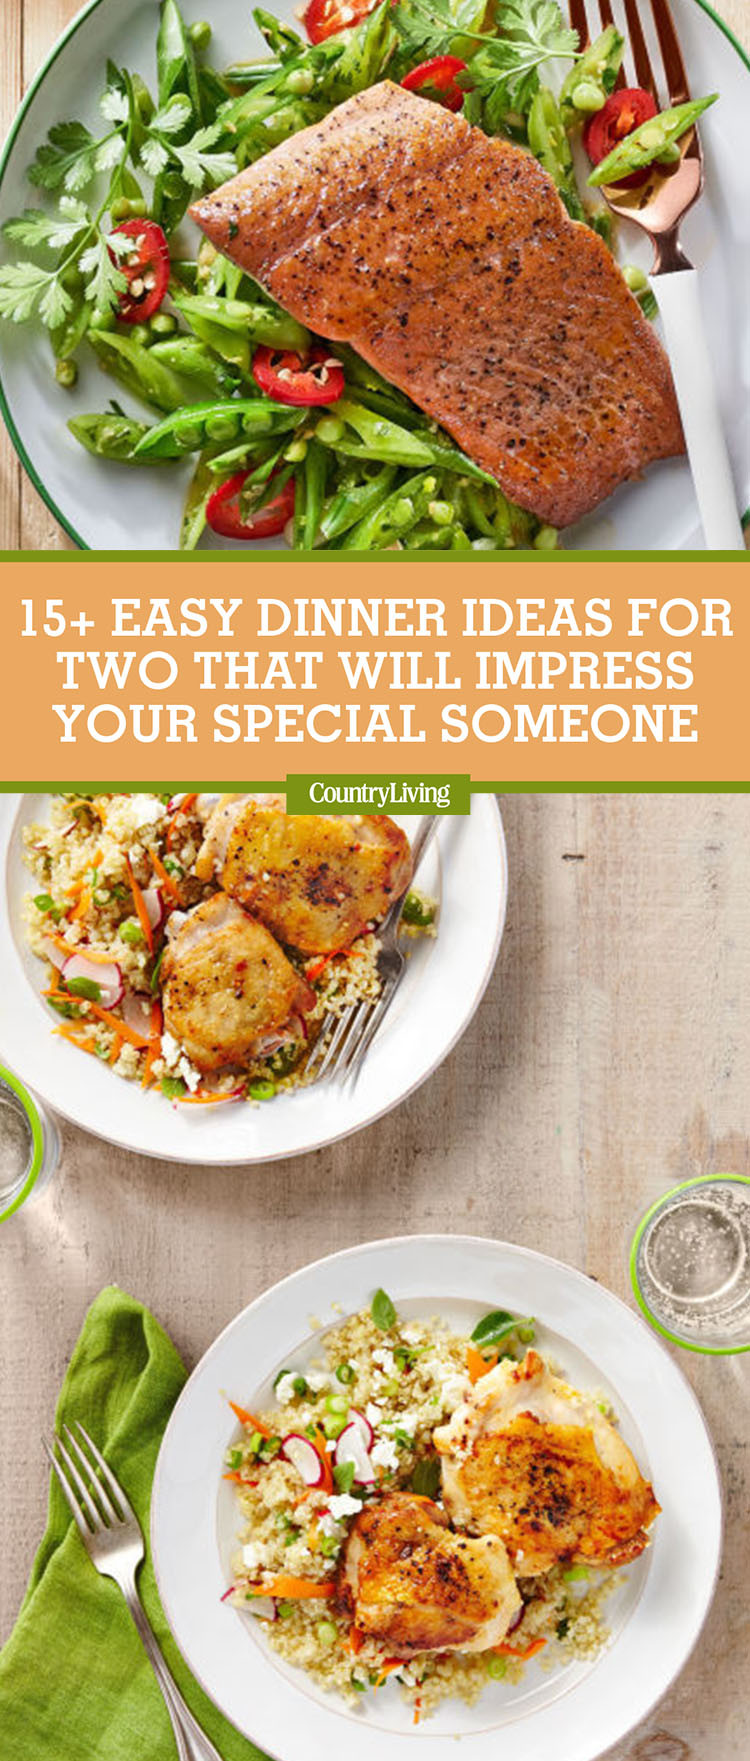 Dinner Ideas For Two
 17 Easy Dinner Ideas for Two Romantic Dinner for Two Recipes